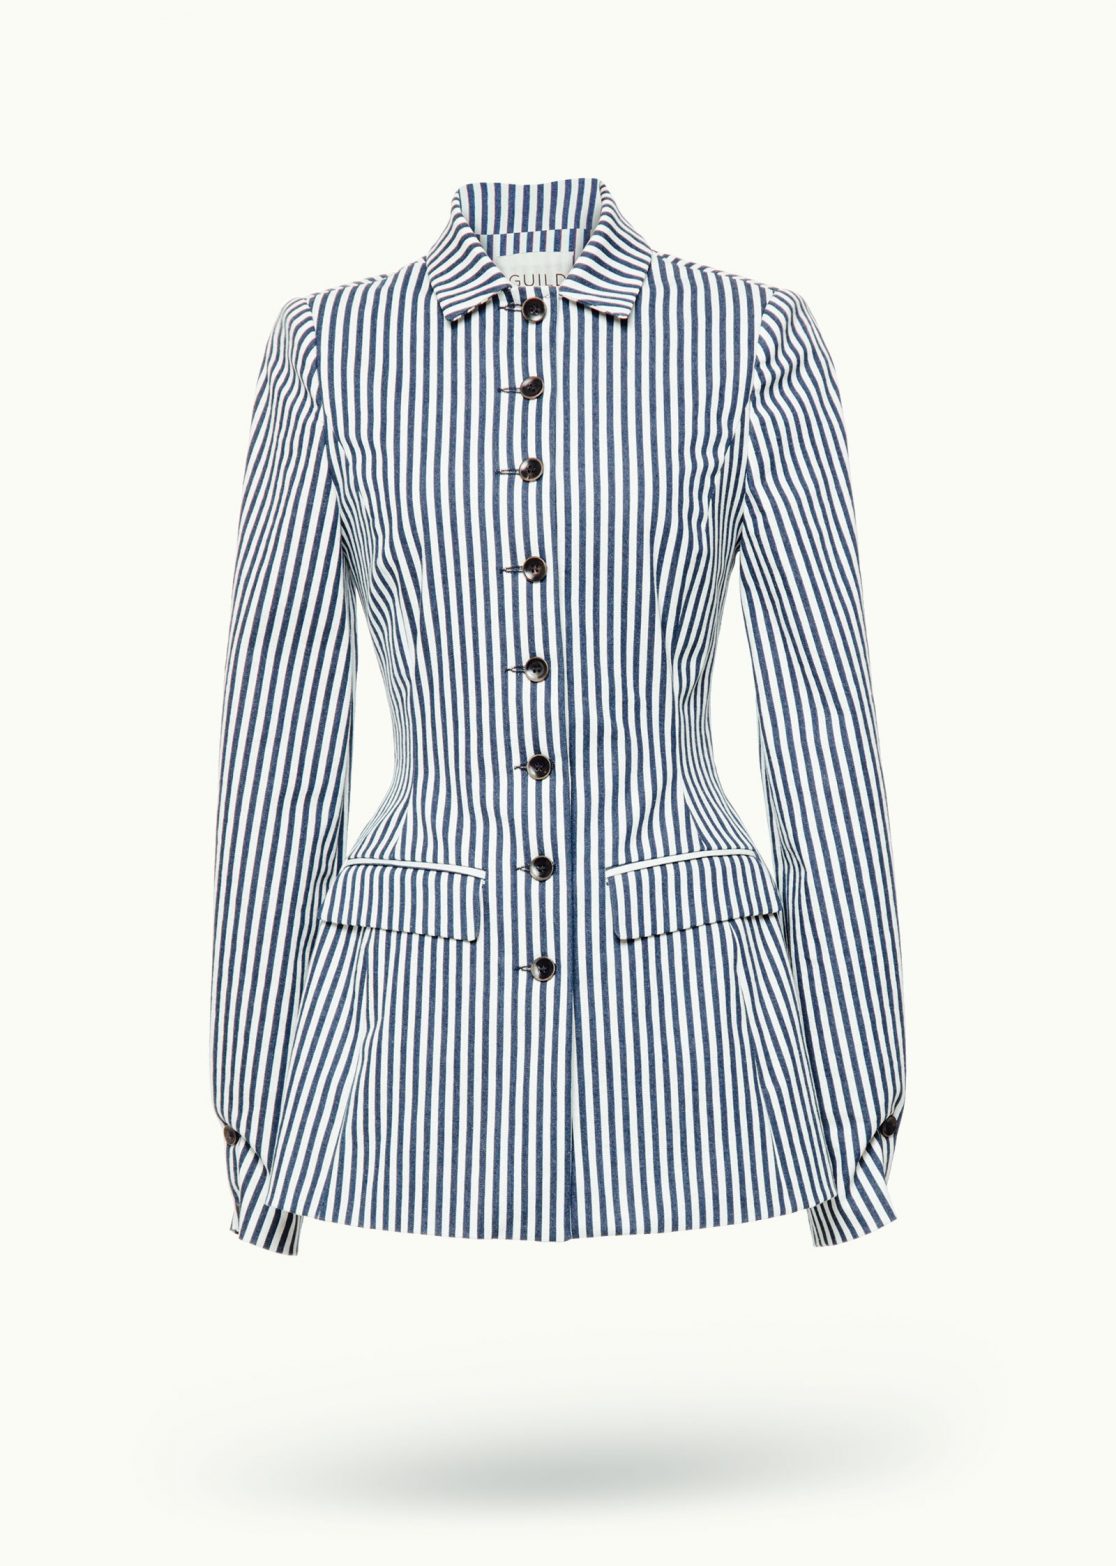 Women - Denim - Suit Jackets - Caraco Jacket White Striped Image Primary